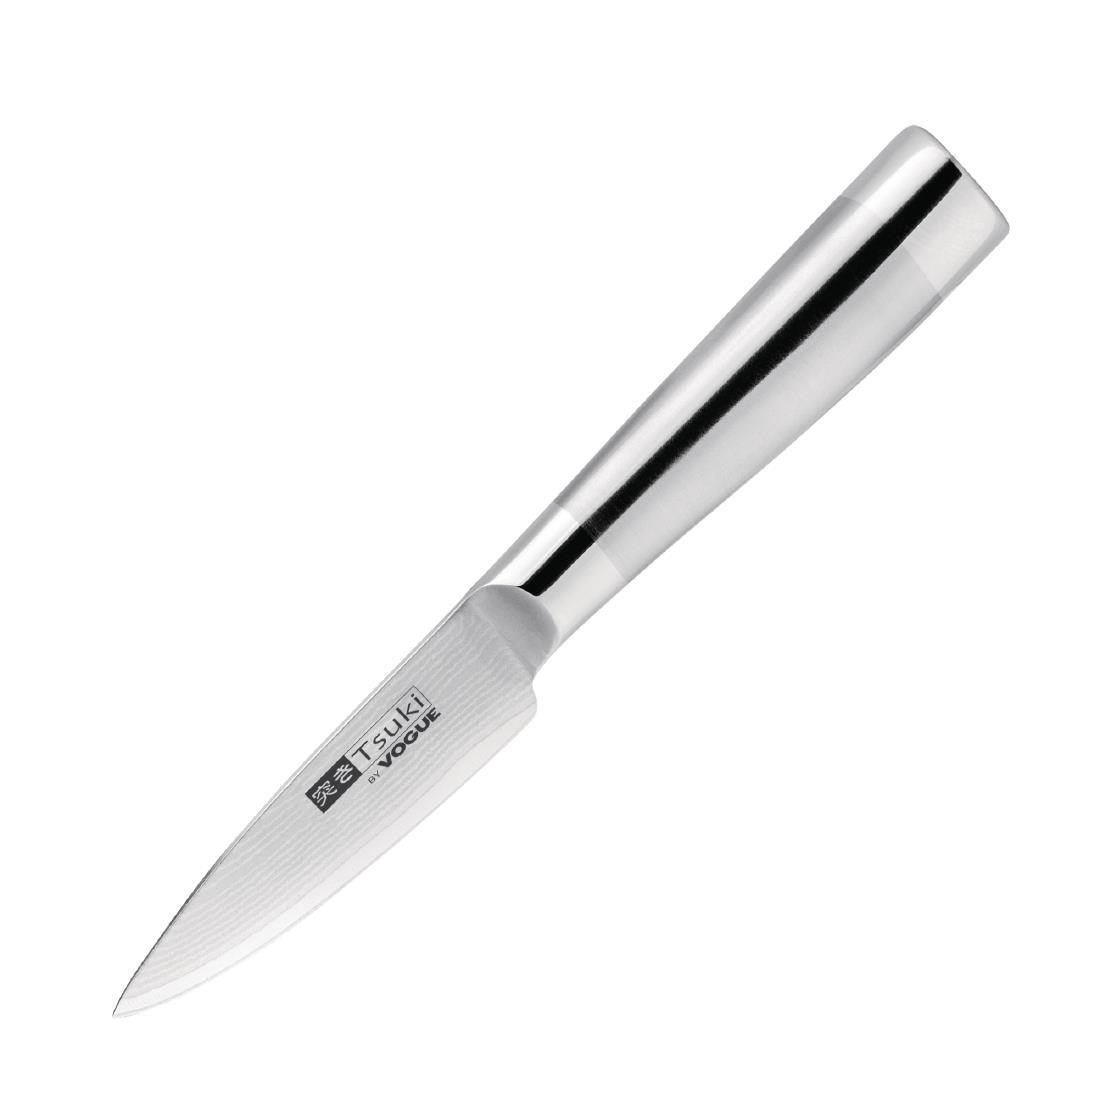 Vogue Tsuki Series 8 Paring Knife 8.8cm - DA443  - 1